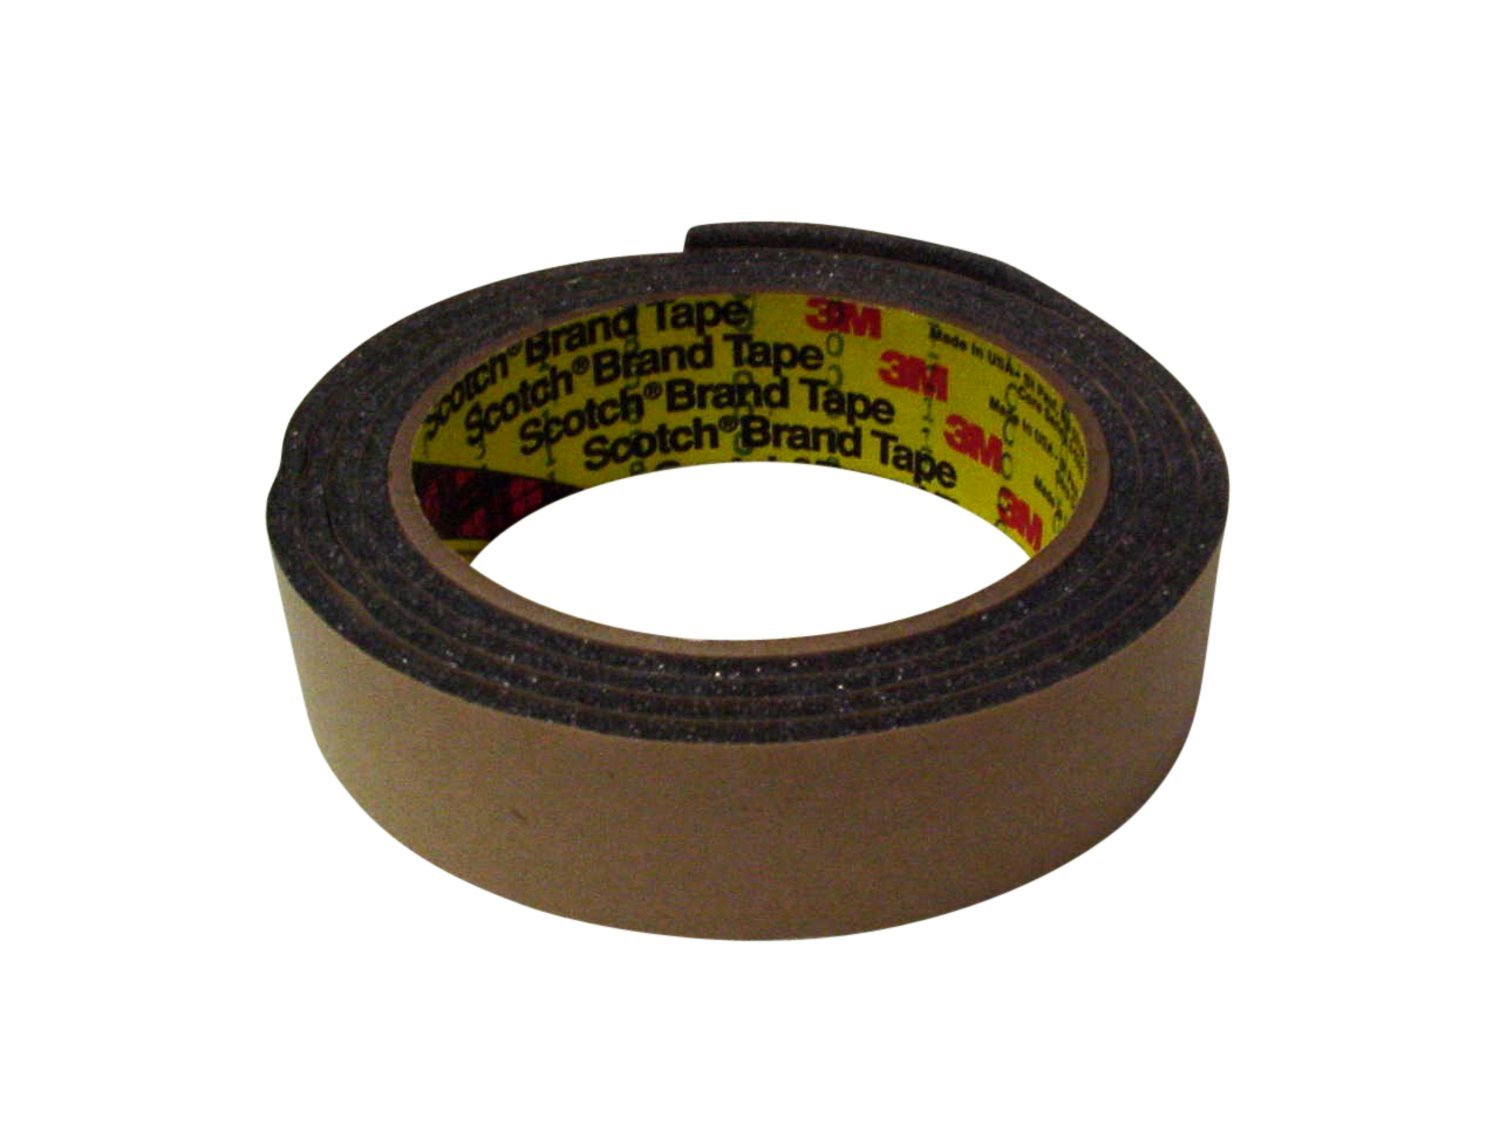 7010295156 - 3M Urethane Foam Tape 4314, Charcoal, Gray, 1/4 in x 18 yd, 250 mil, 36
rolls per case